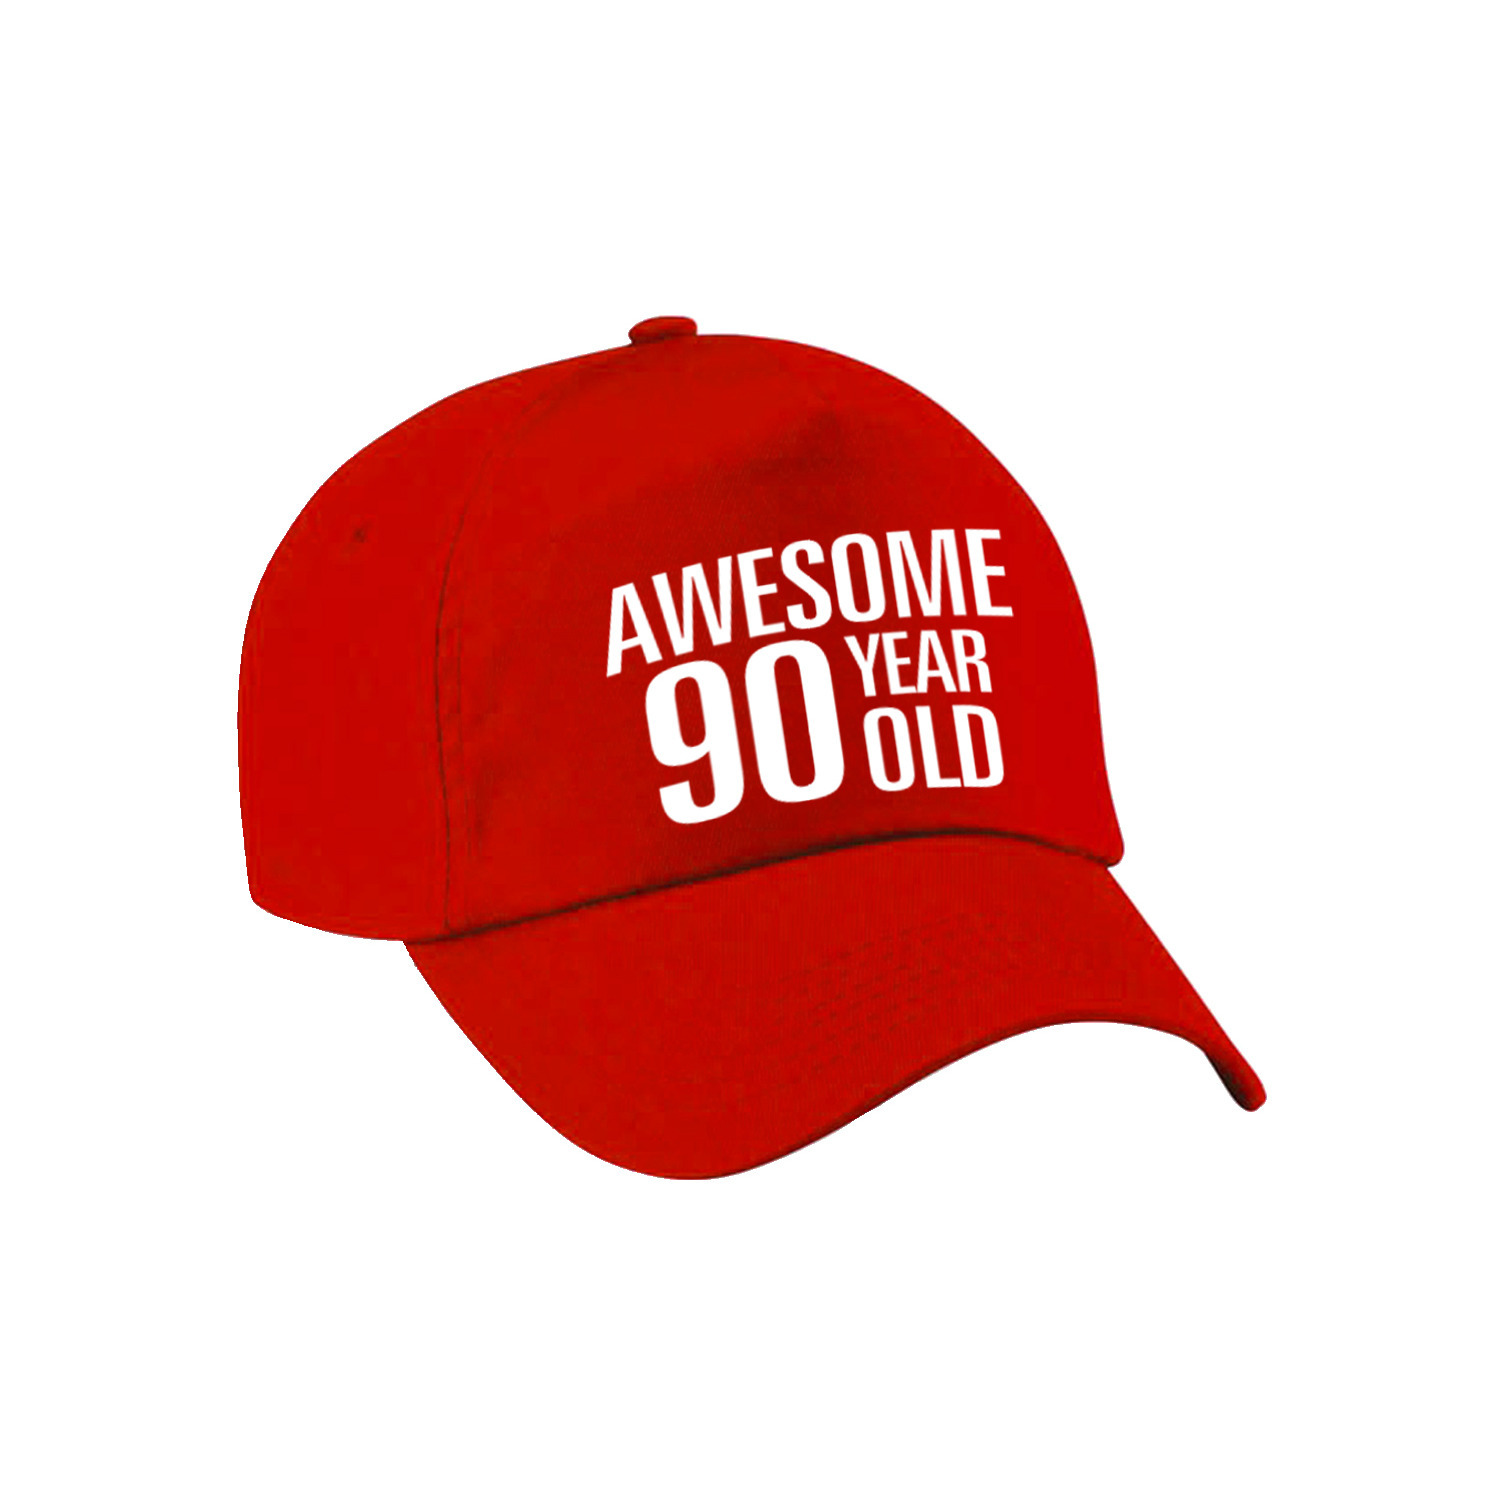 Awesome 90 year old verjaardag pet - cap rood voor dames en heren